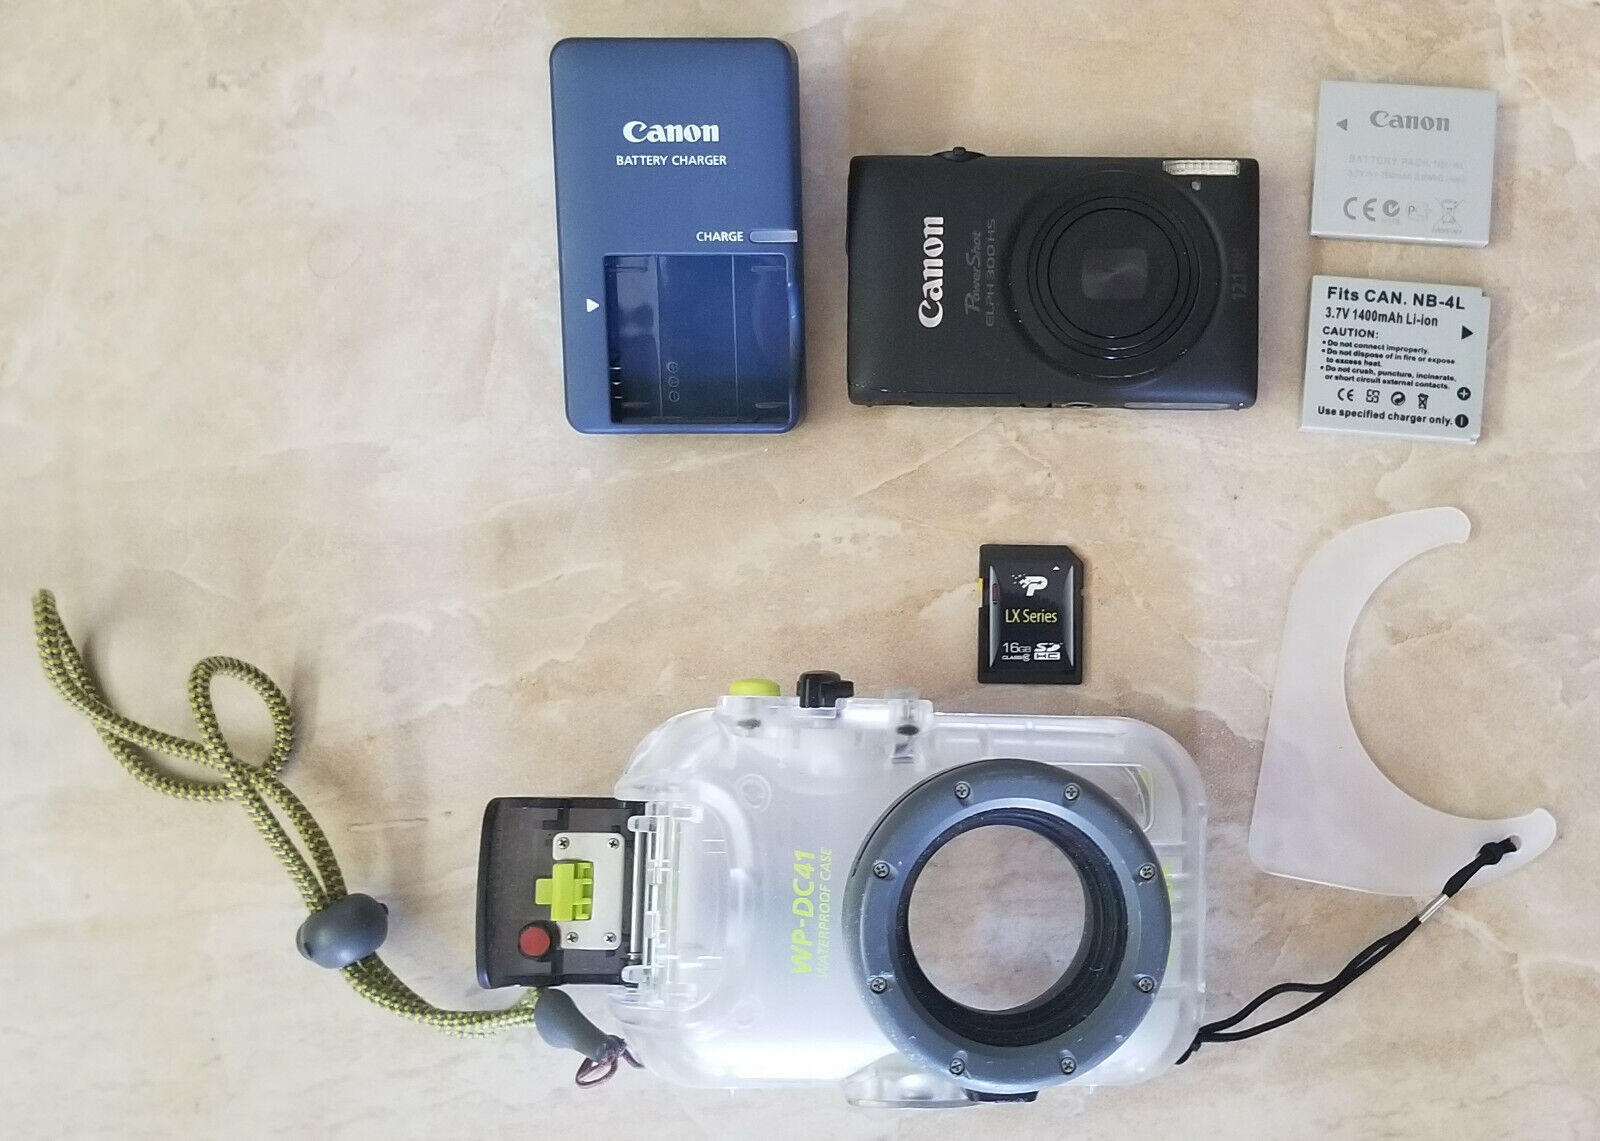 Canon WP-DC41 / ELPH 300HS underwater digital camera bundle kit